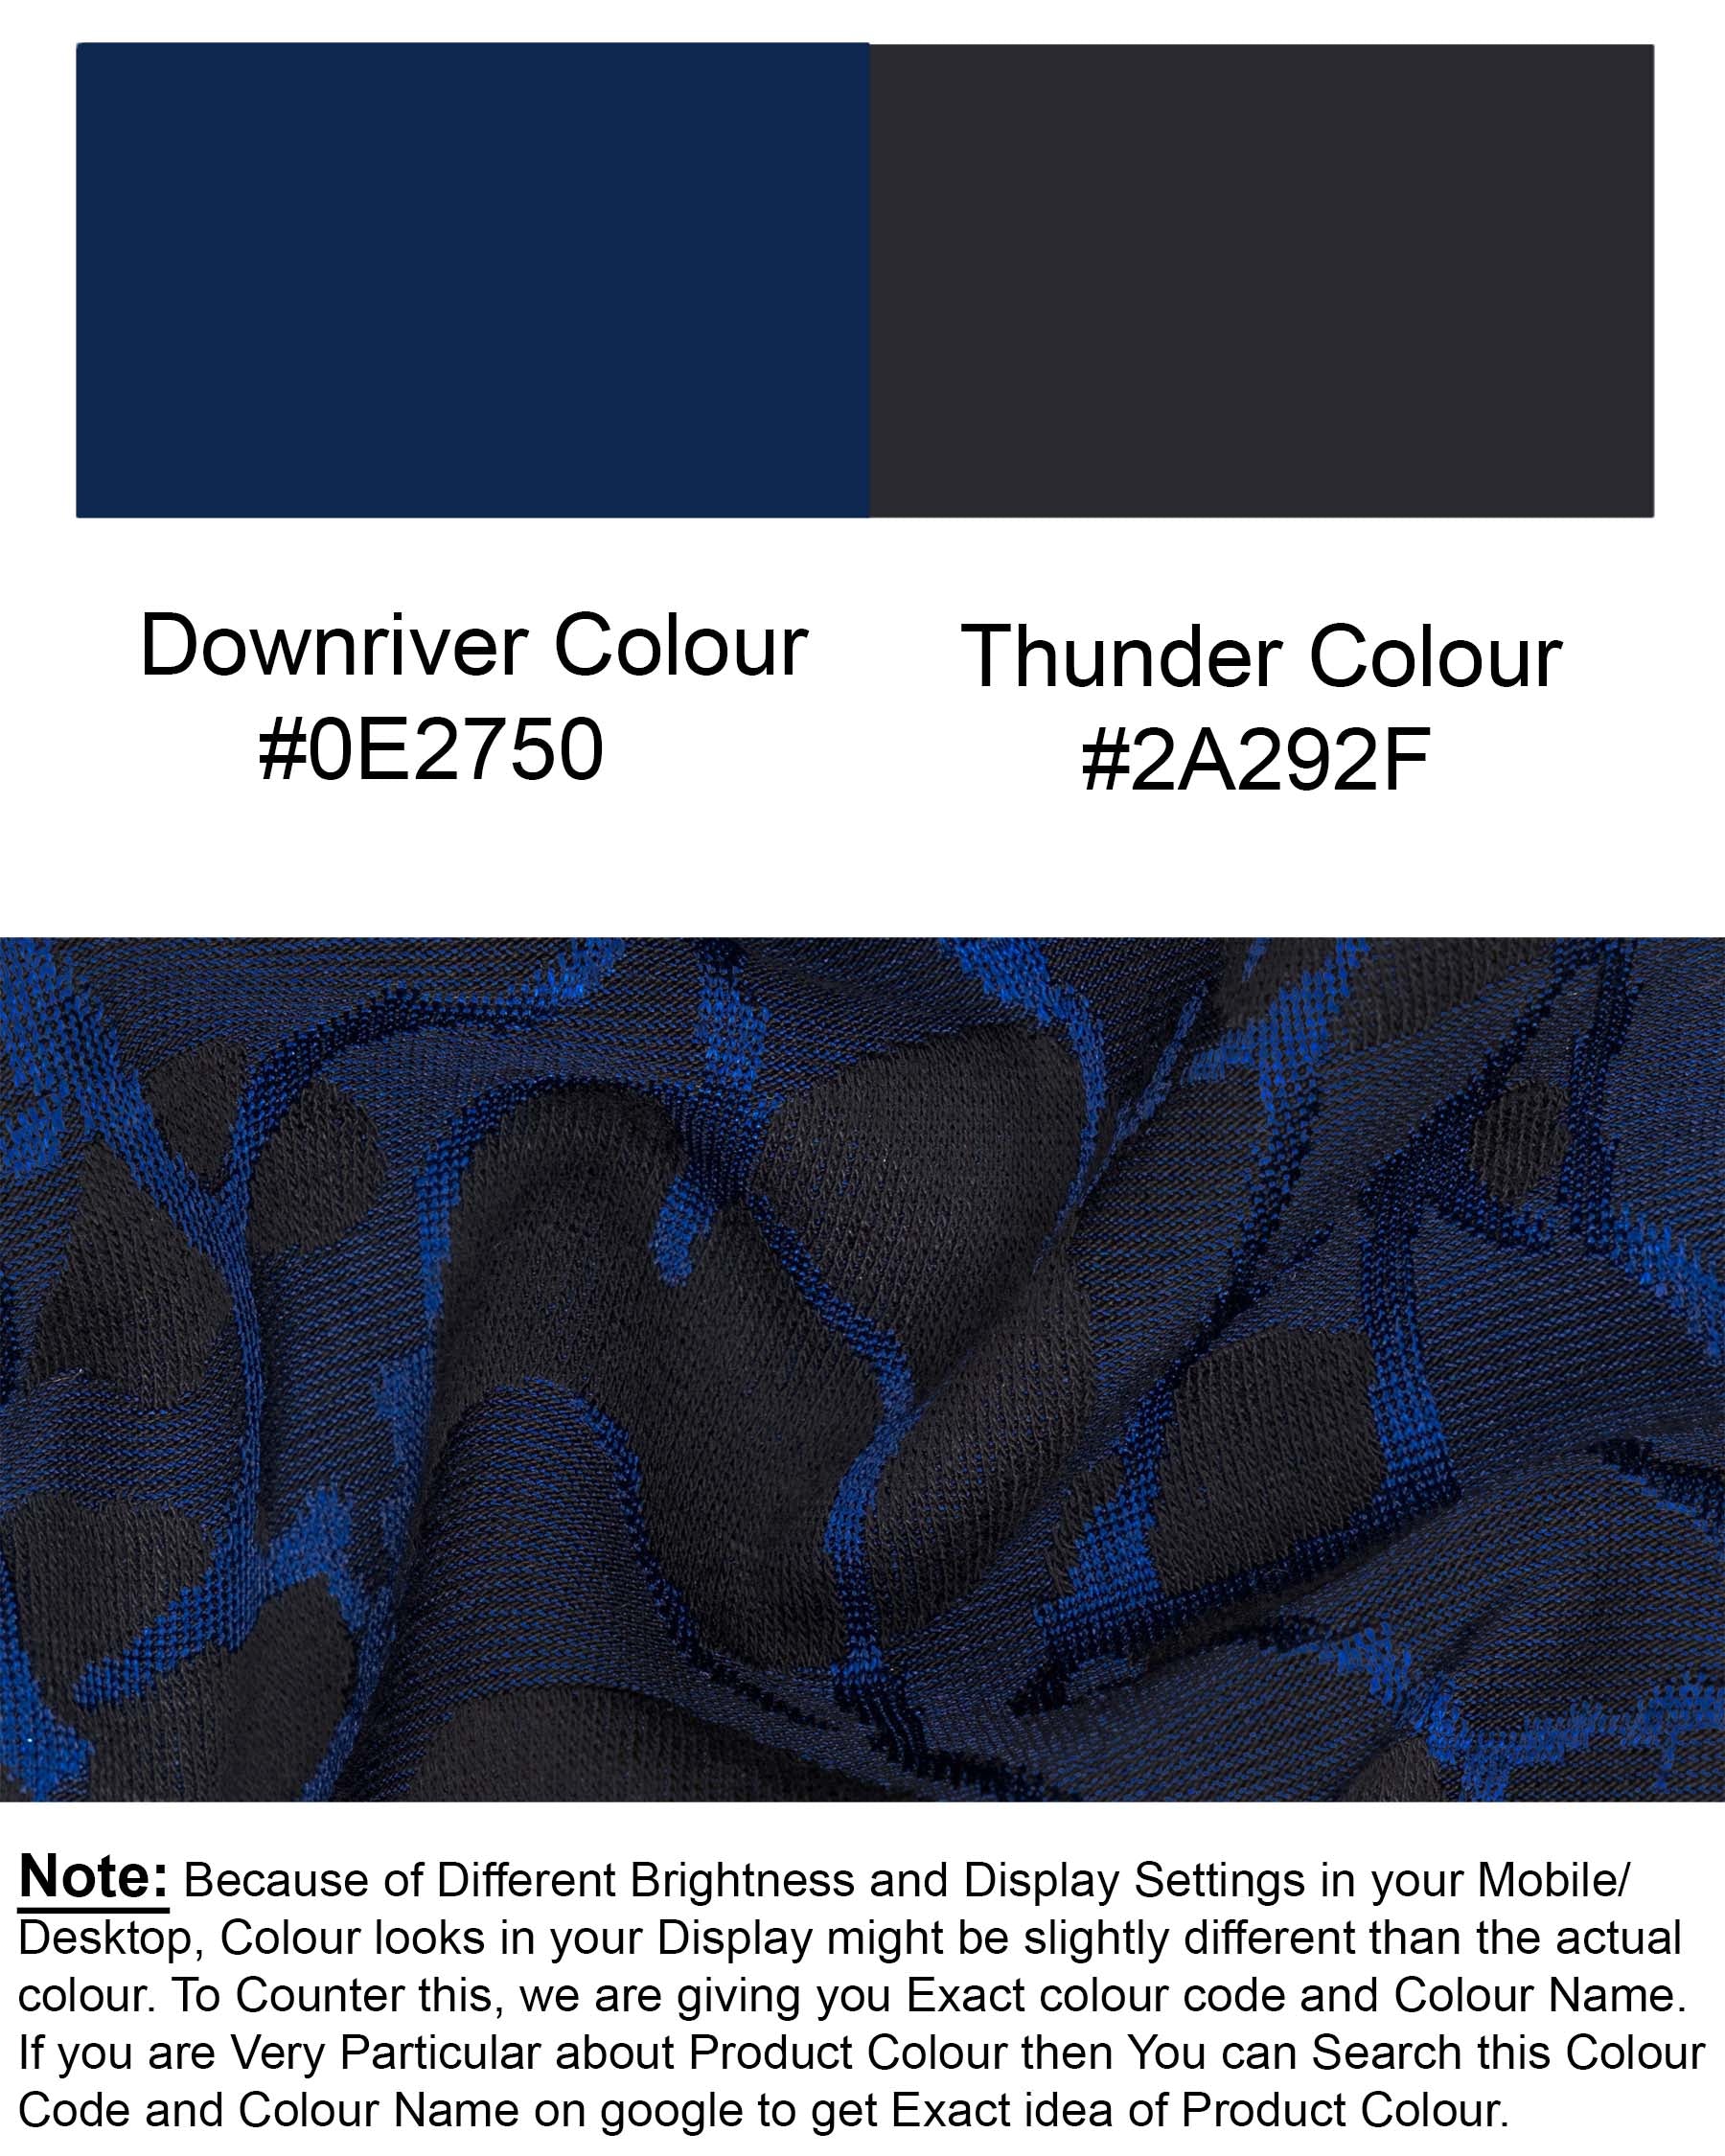 Downriver Blue with Thunder Black Tuxedo Designer Blazer BL1798-BKL-36, BL1798-BKL-38, BL1798-BKL-40, BL1798-BKL-42, BL1798-BKL-44, BL1798-BKL-46, BL1798-BKL-48, BL1798-BKL-50, BL1798-BKL-52, BL1798-BKL-54, BL1798-BKL-56, BL1798-BKL-58, BL1798-BKL-60